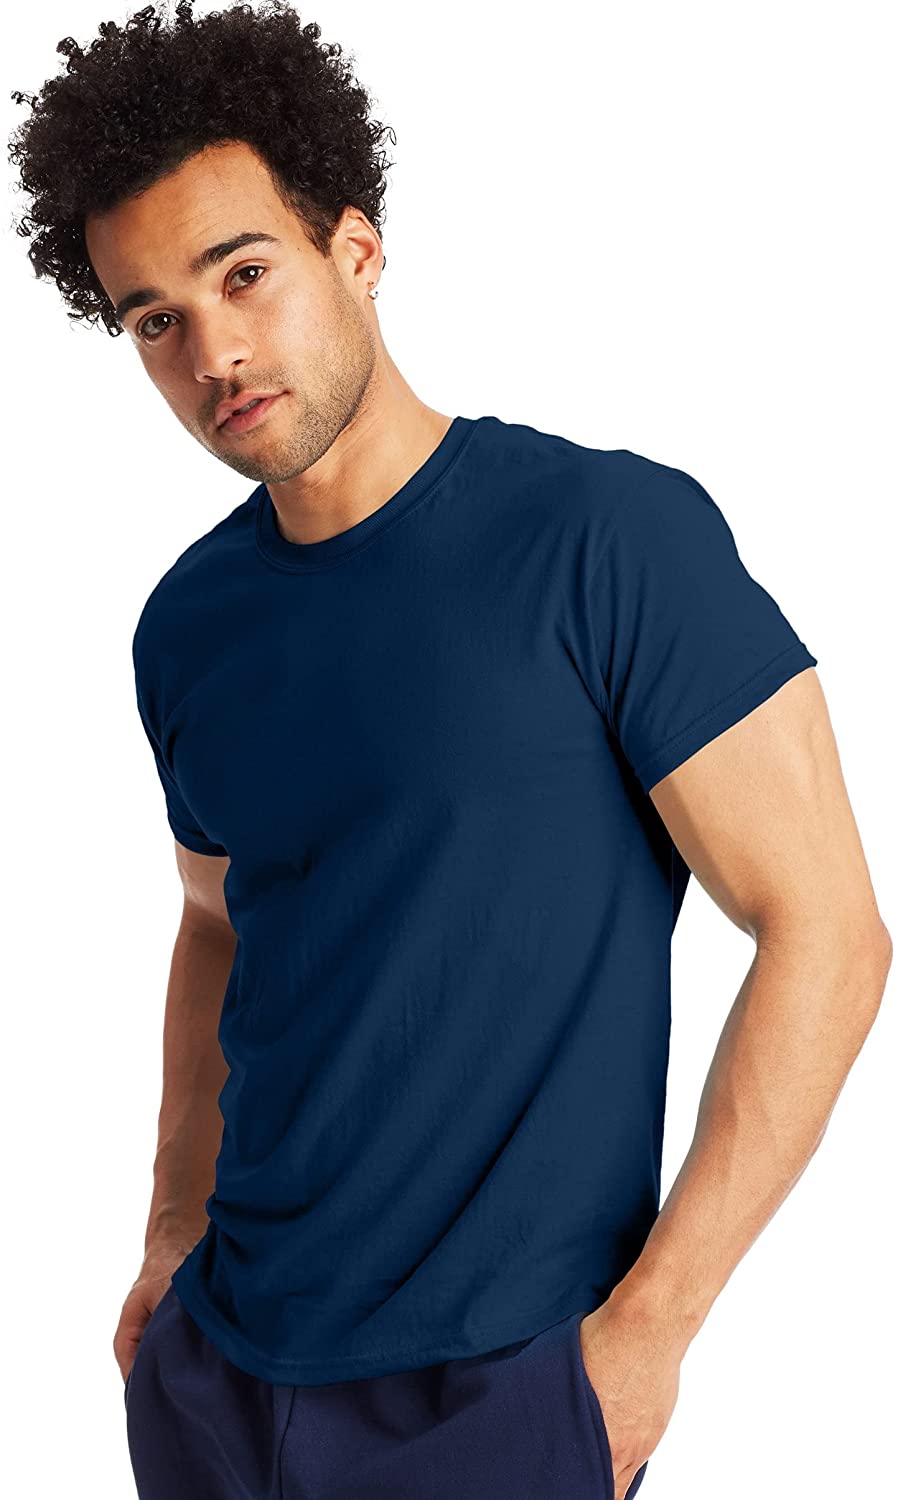 Hanes Men's X-Temp Performance T-Shirt